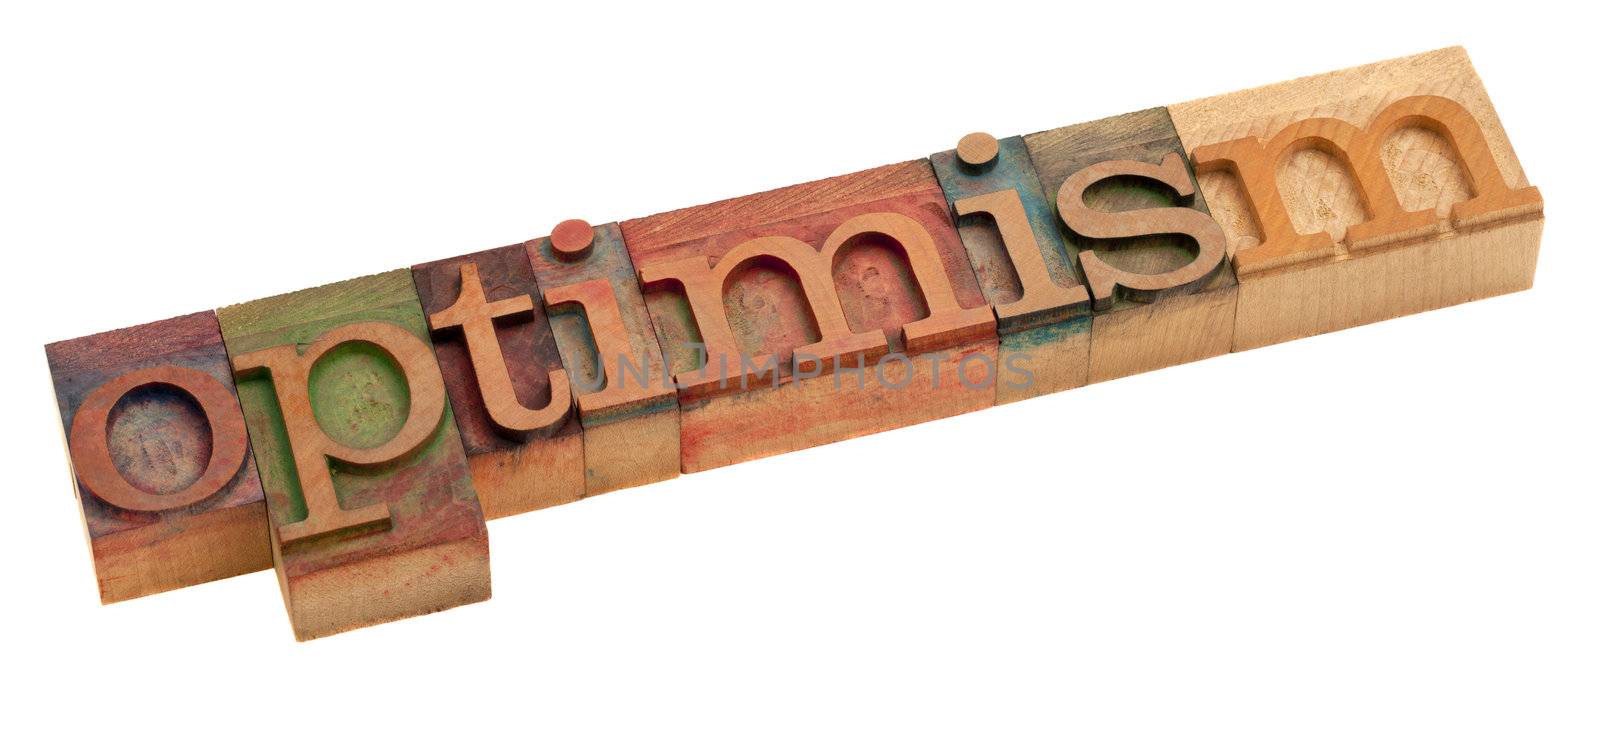 optimism p word in letterpress type by PixelsAway